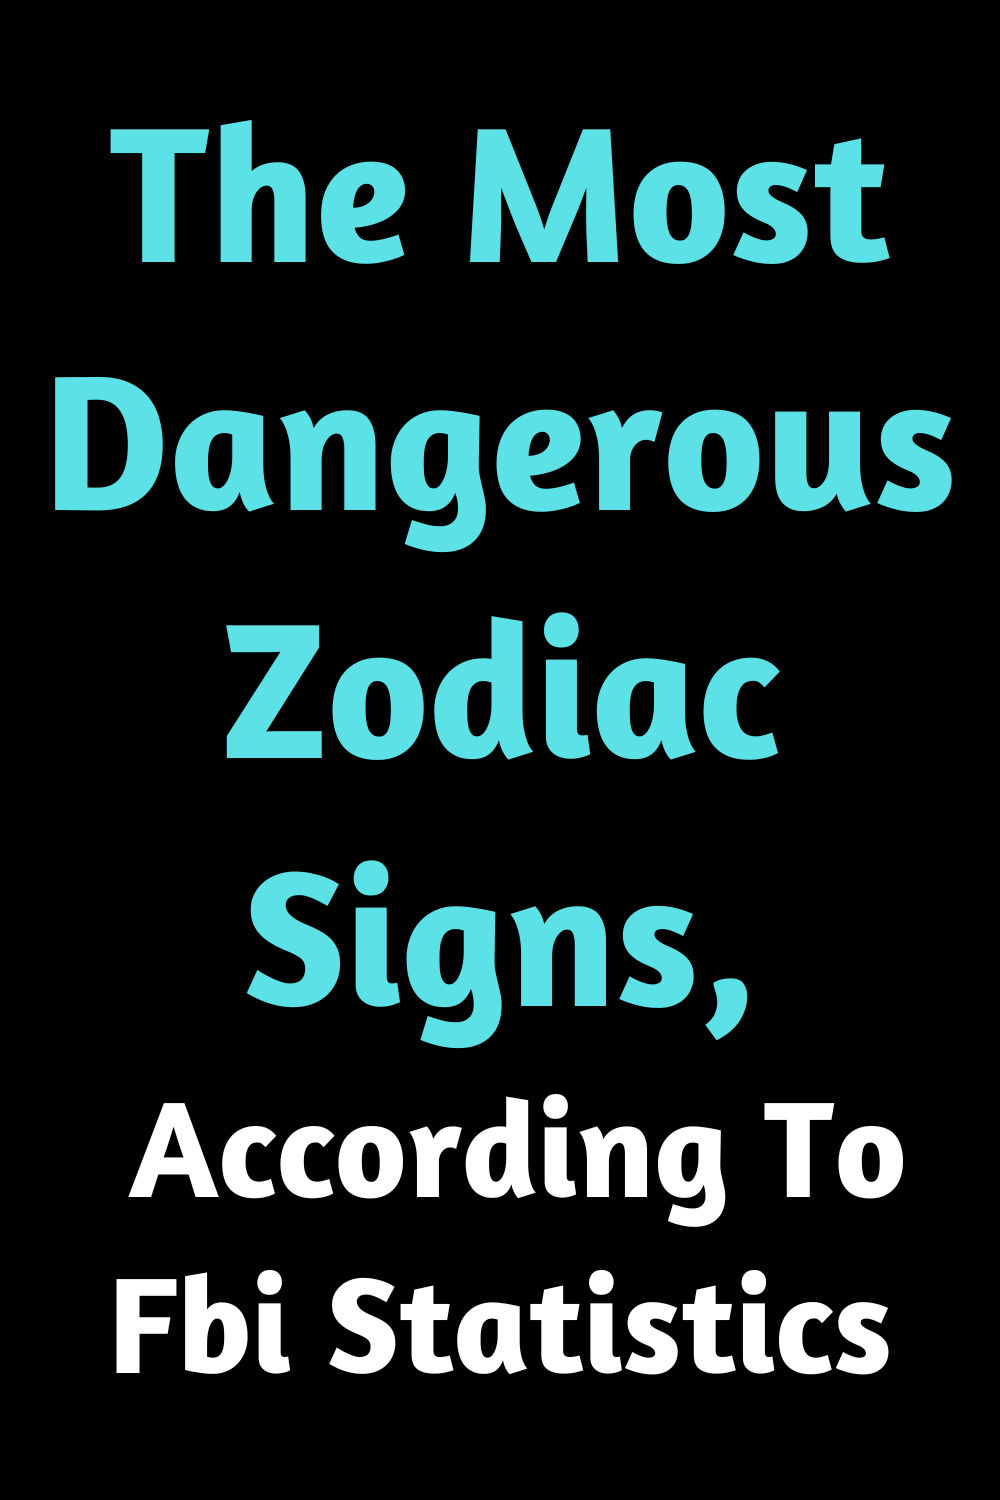 The Most Dangerous Zodiac Signs, According To Fbi Statistics